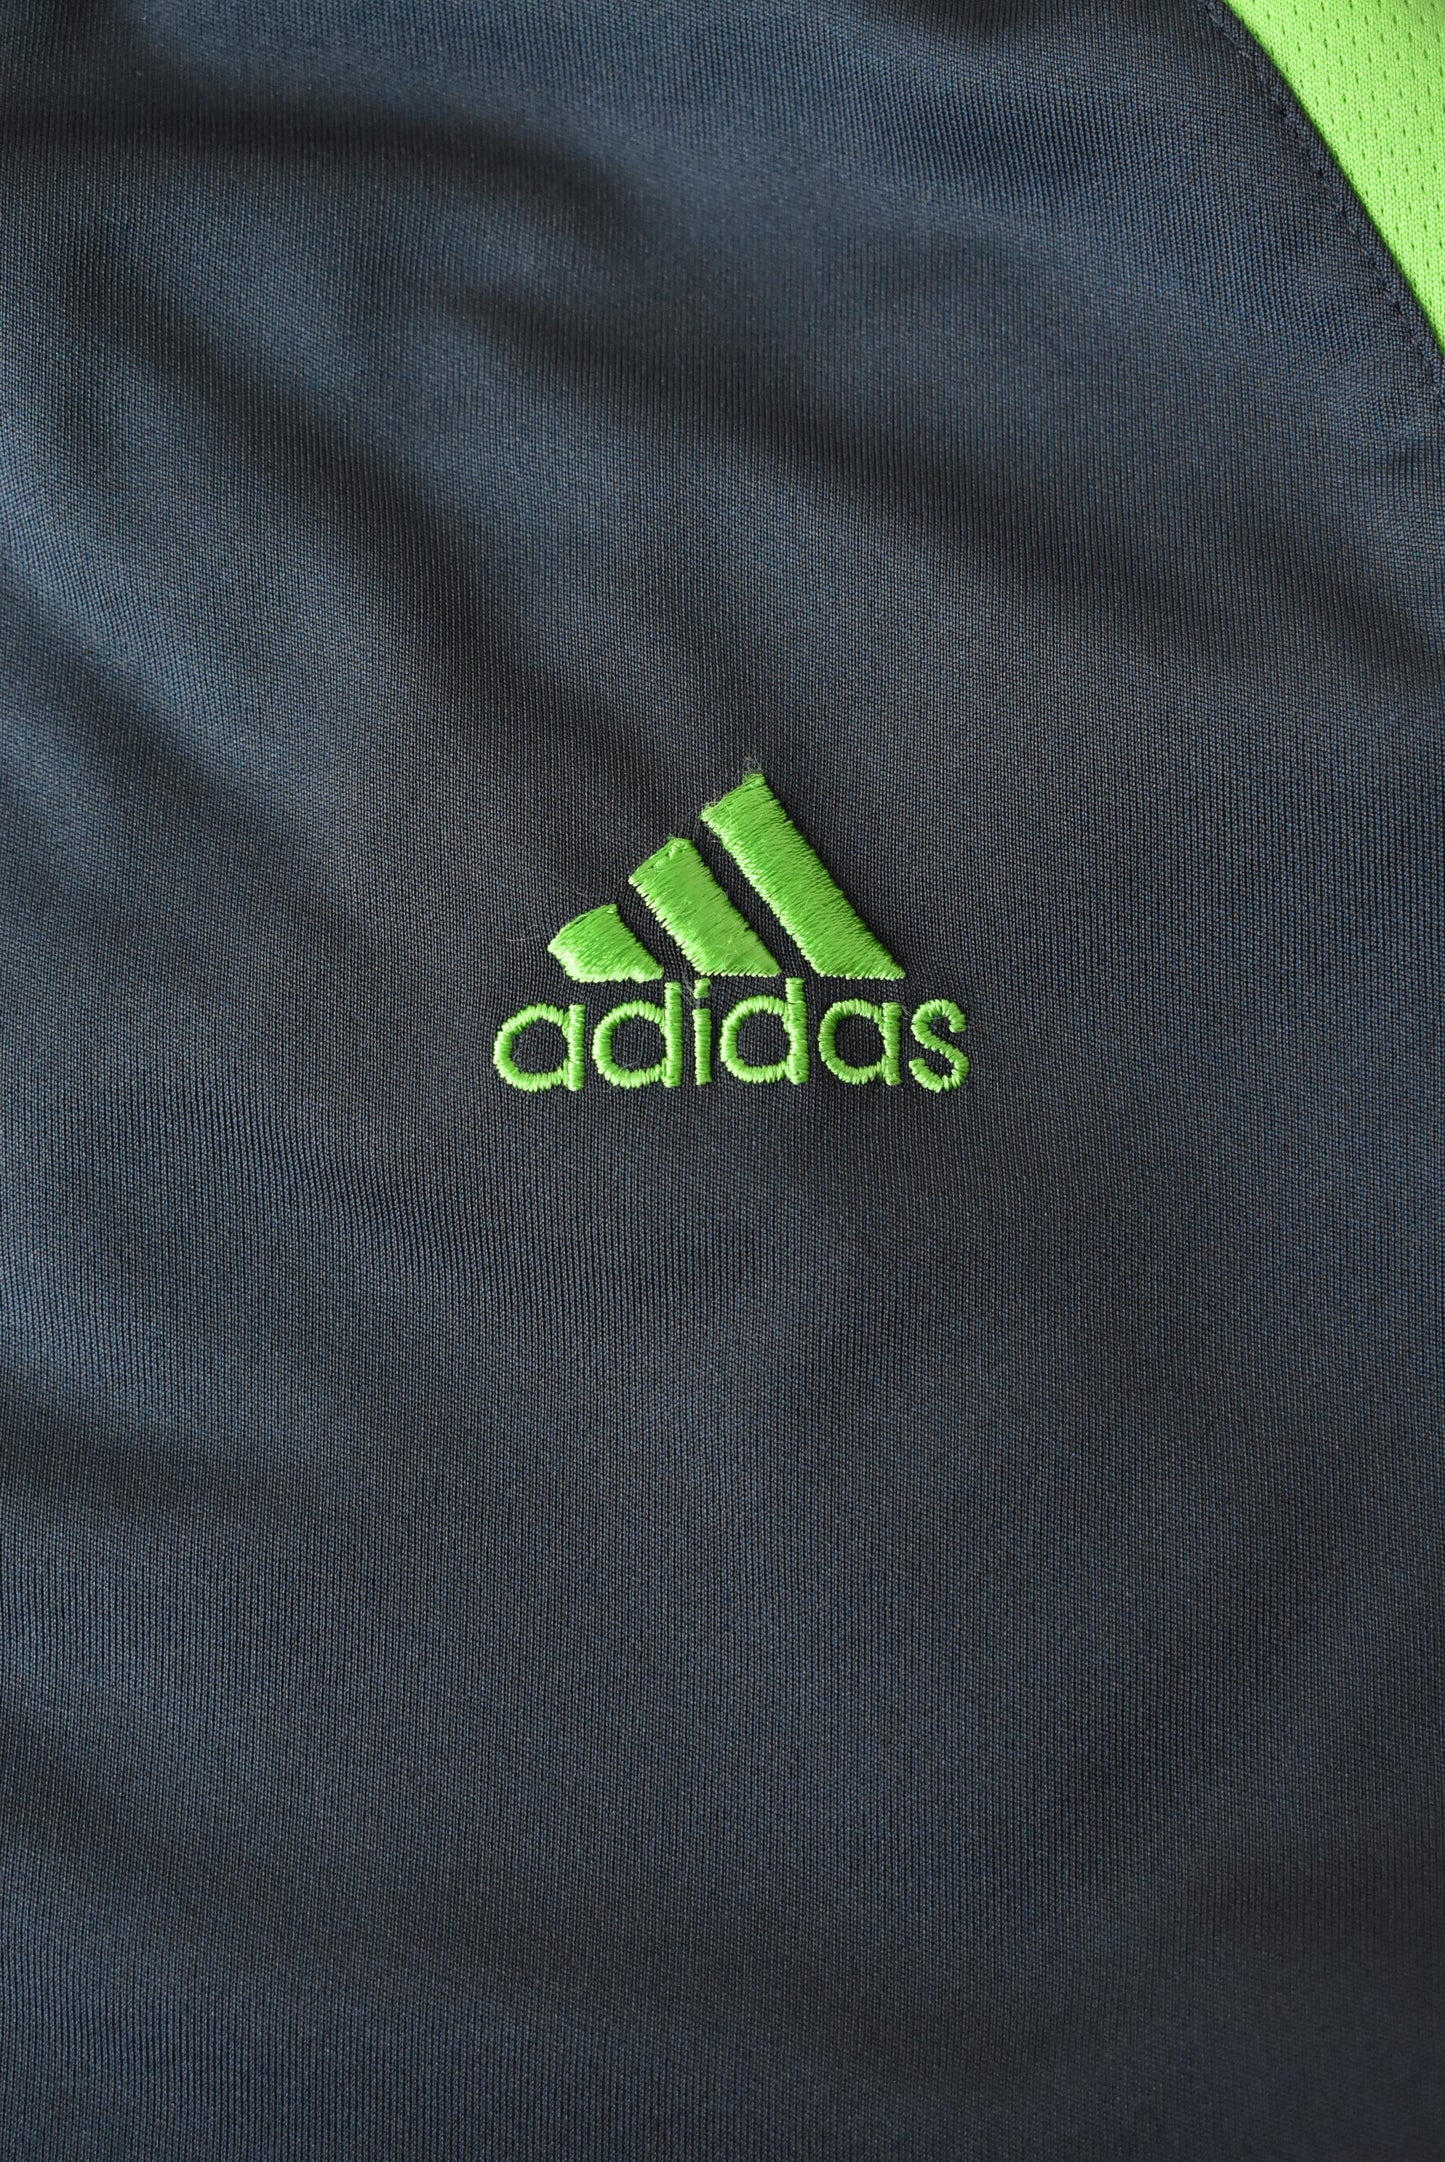 Adidas sport top (size M)